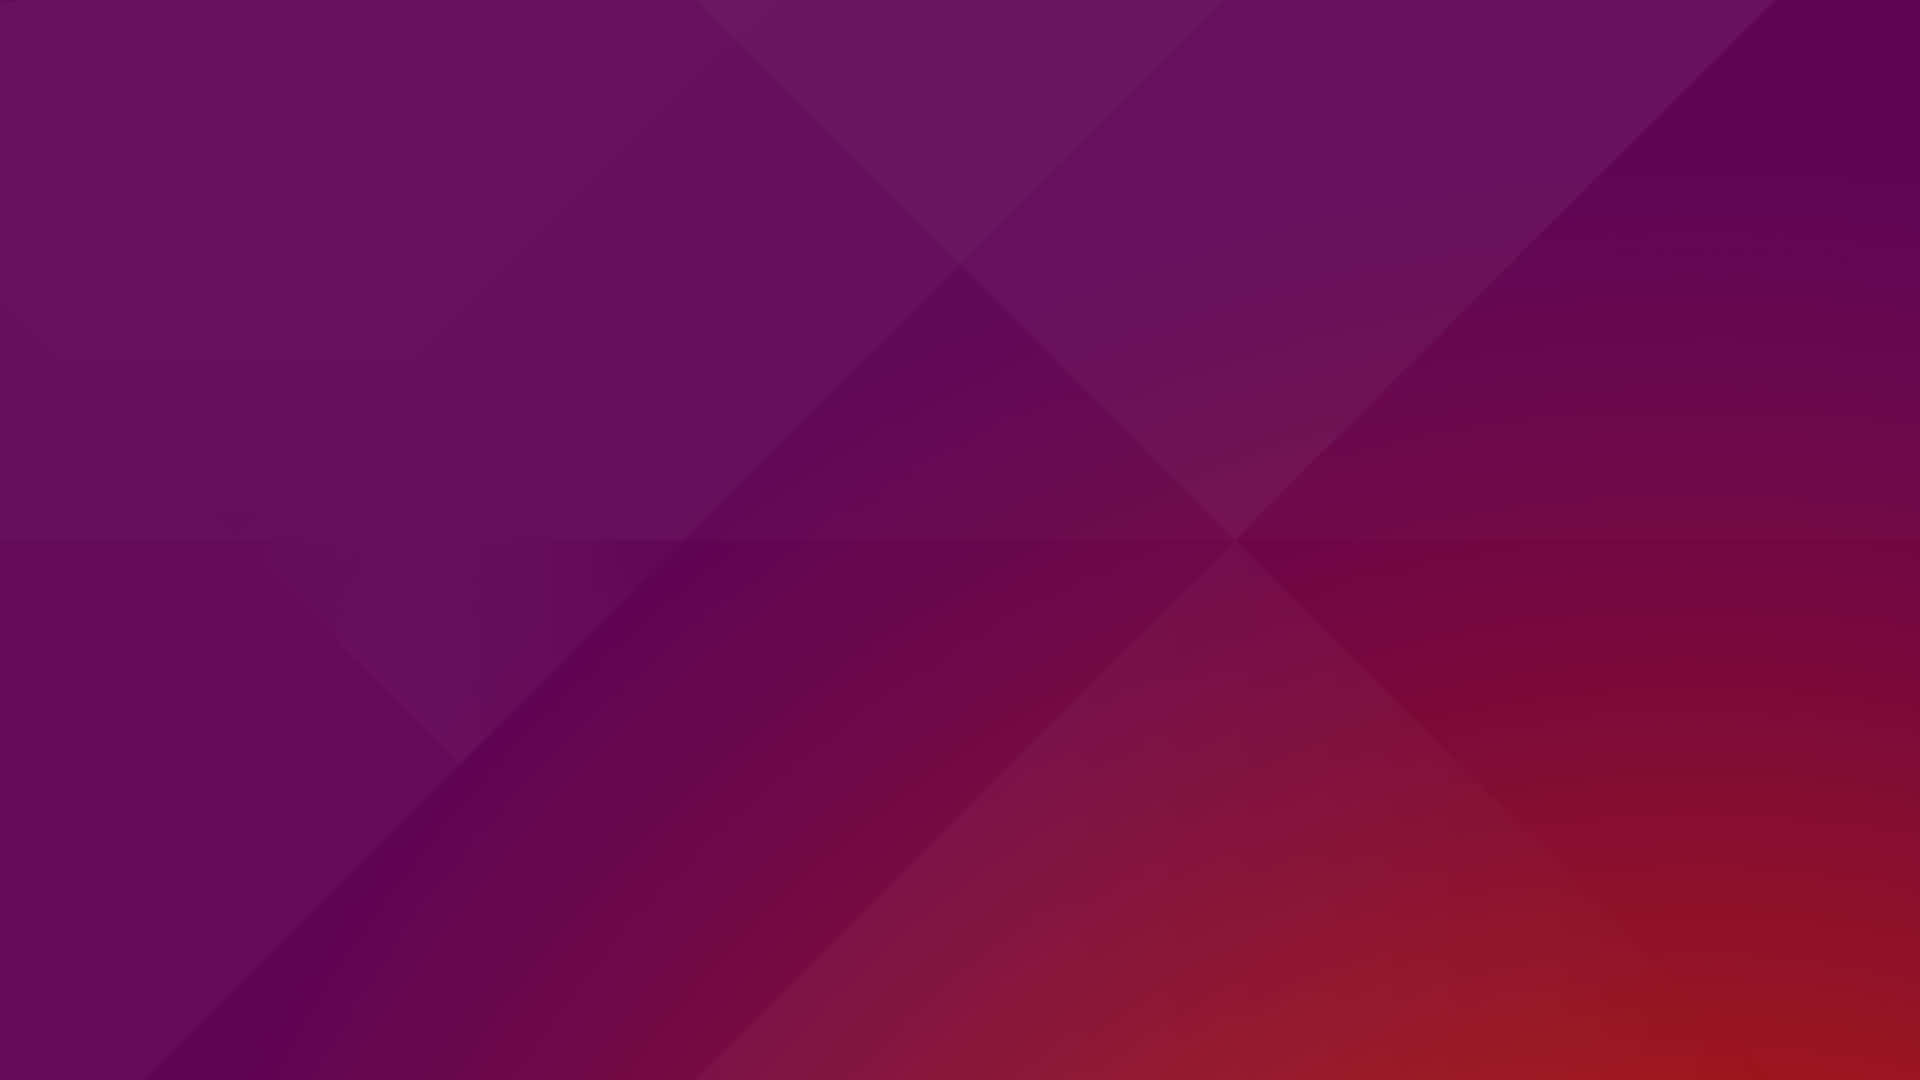 The Ultra High-Definition Ubuntu 4K Wallpaper Wallpaper